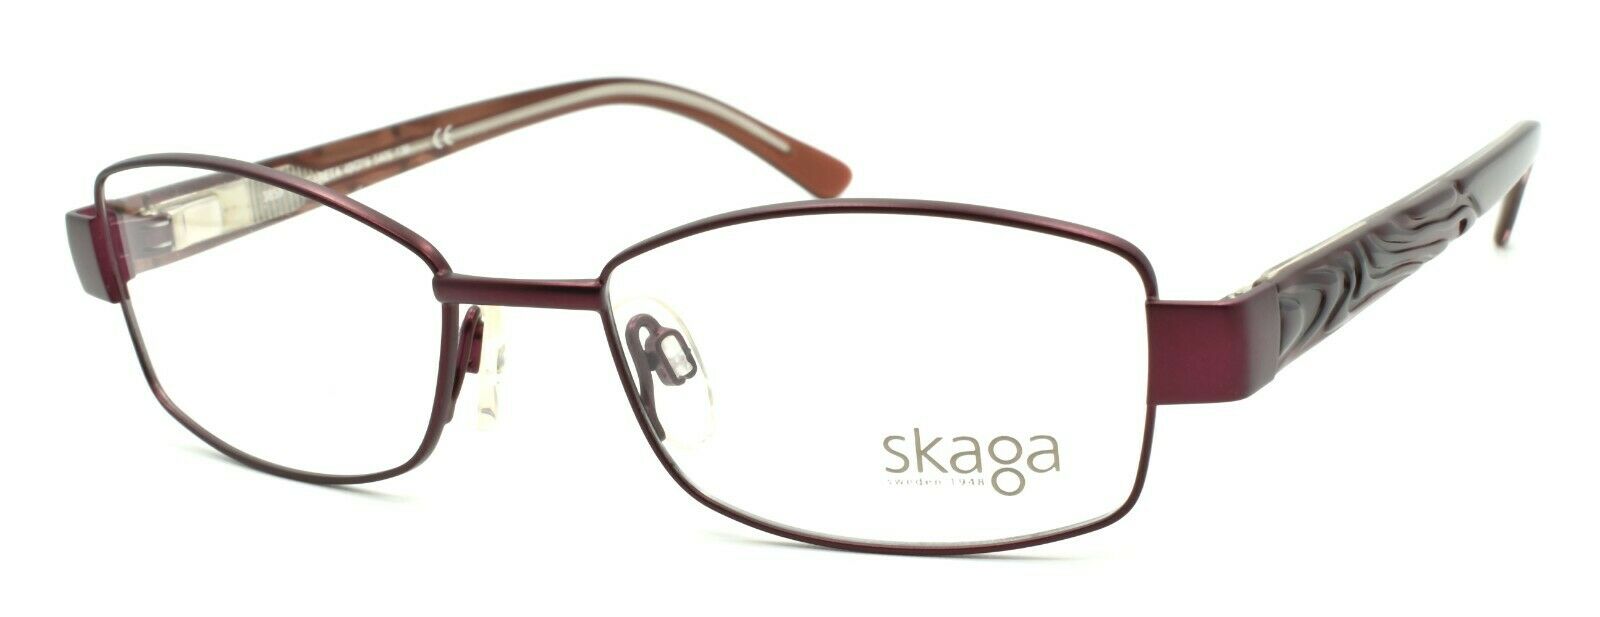 1-Skaga 3859 Margareta 5405 Women's Eyeglasses Frames PETITE 49-16-130 Burgundy-IKSpecs